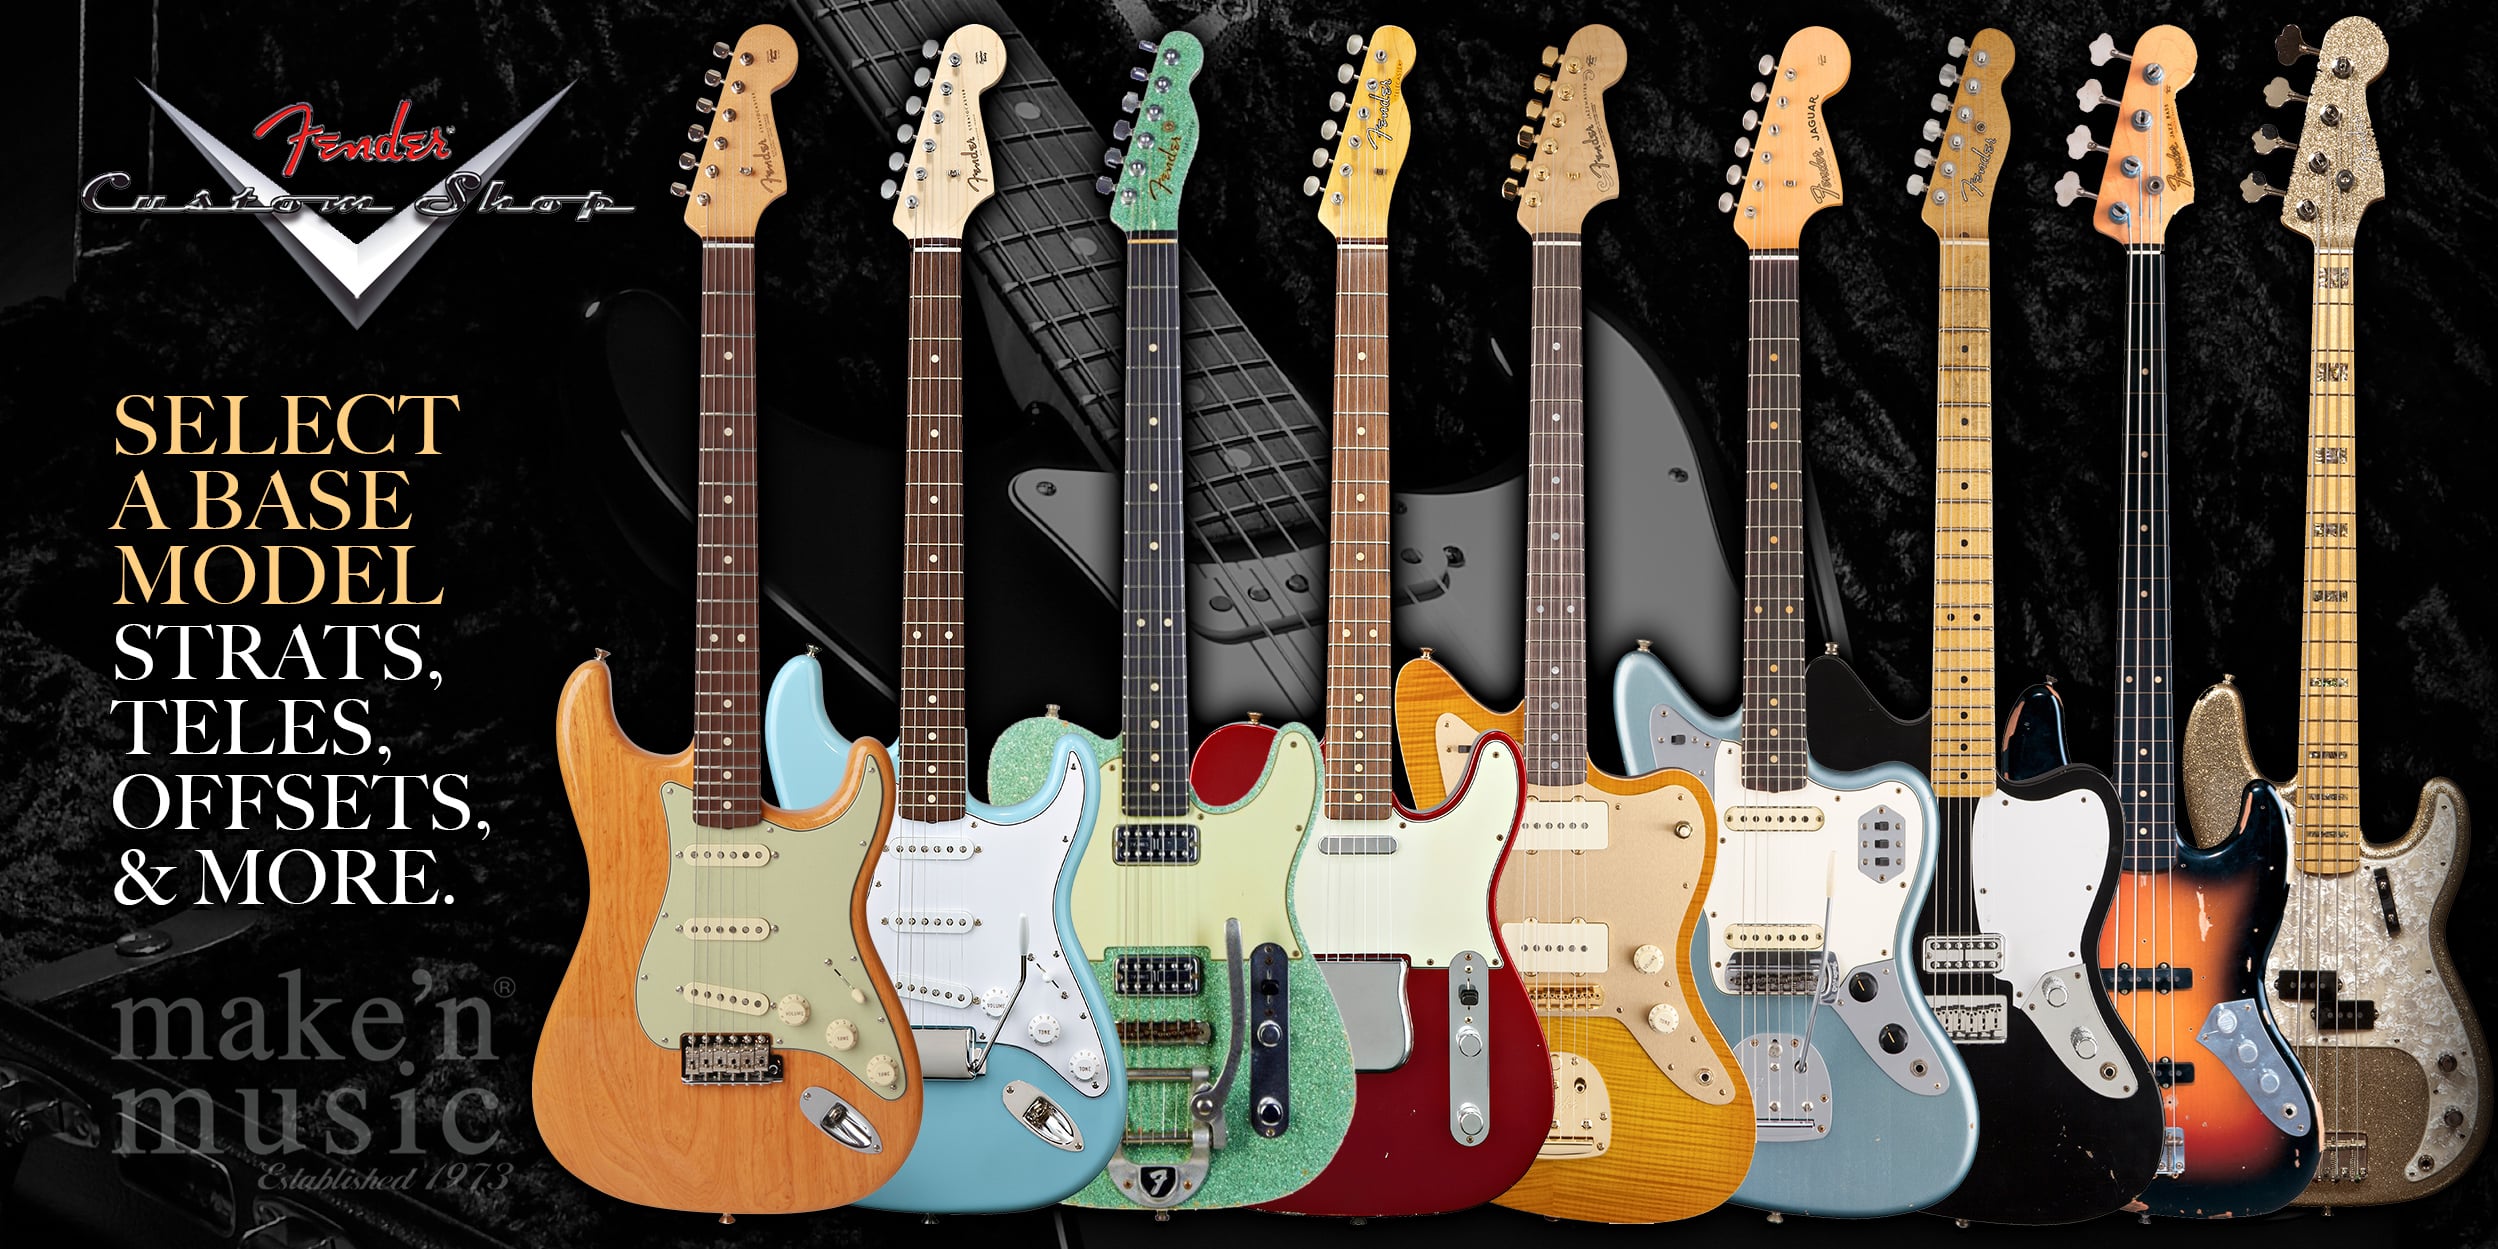 Fender Custom Shop Models - Strats, Teles, Offsets